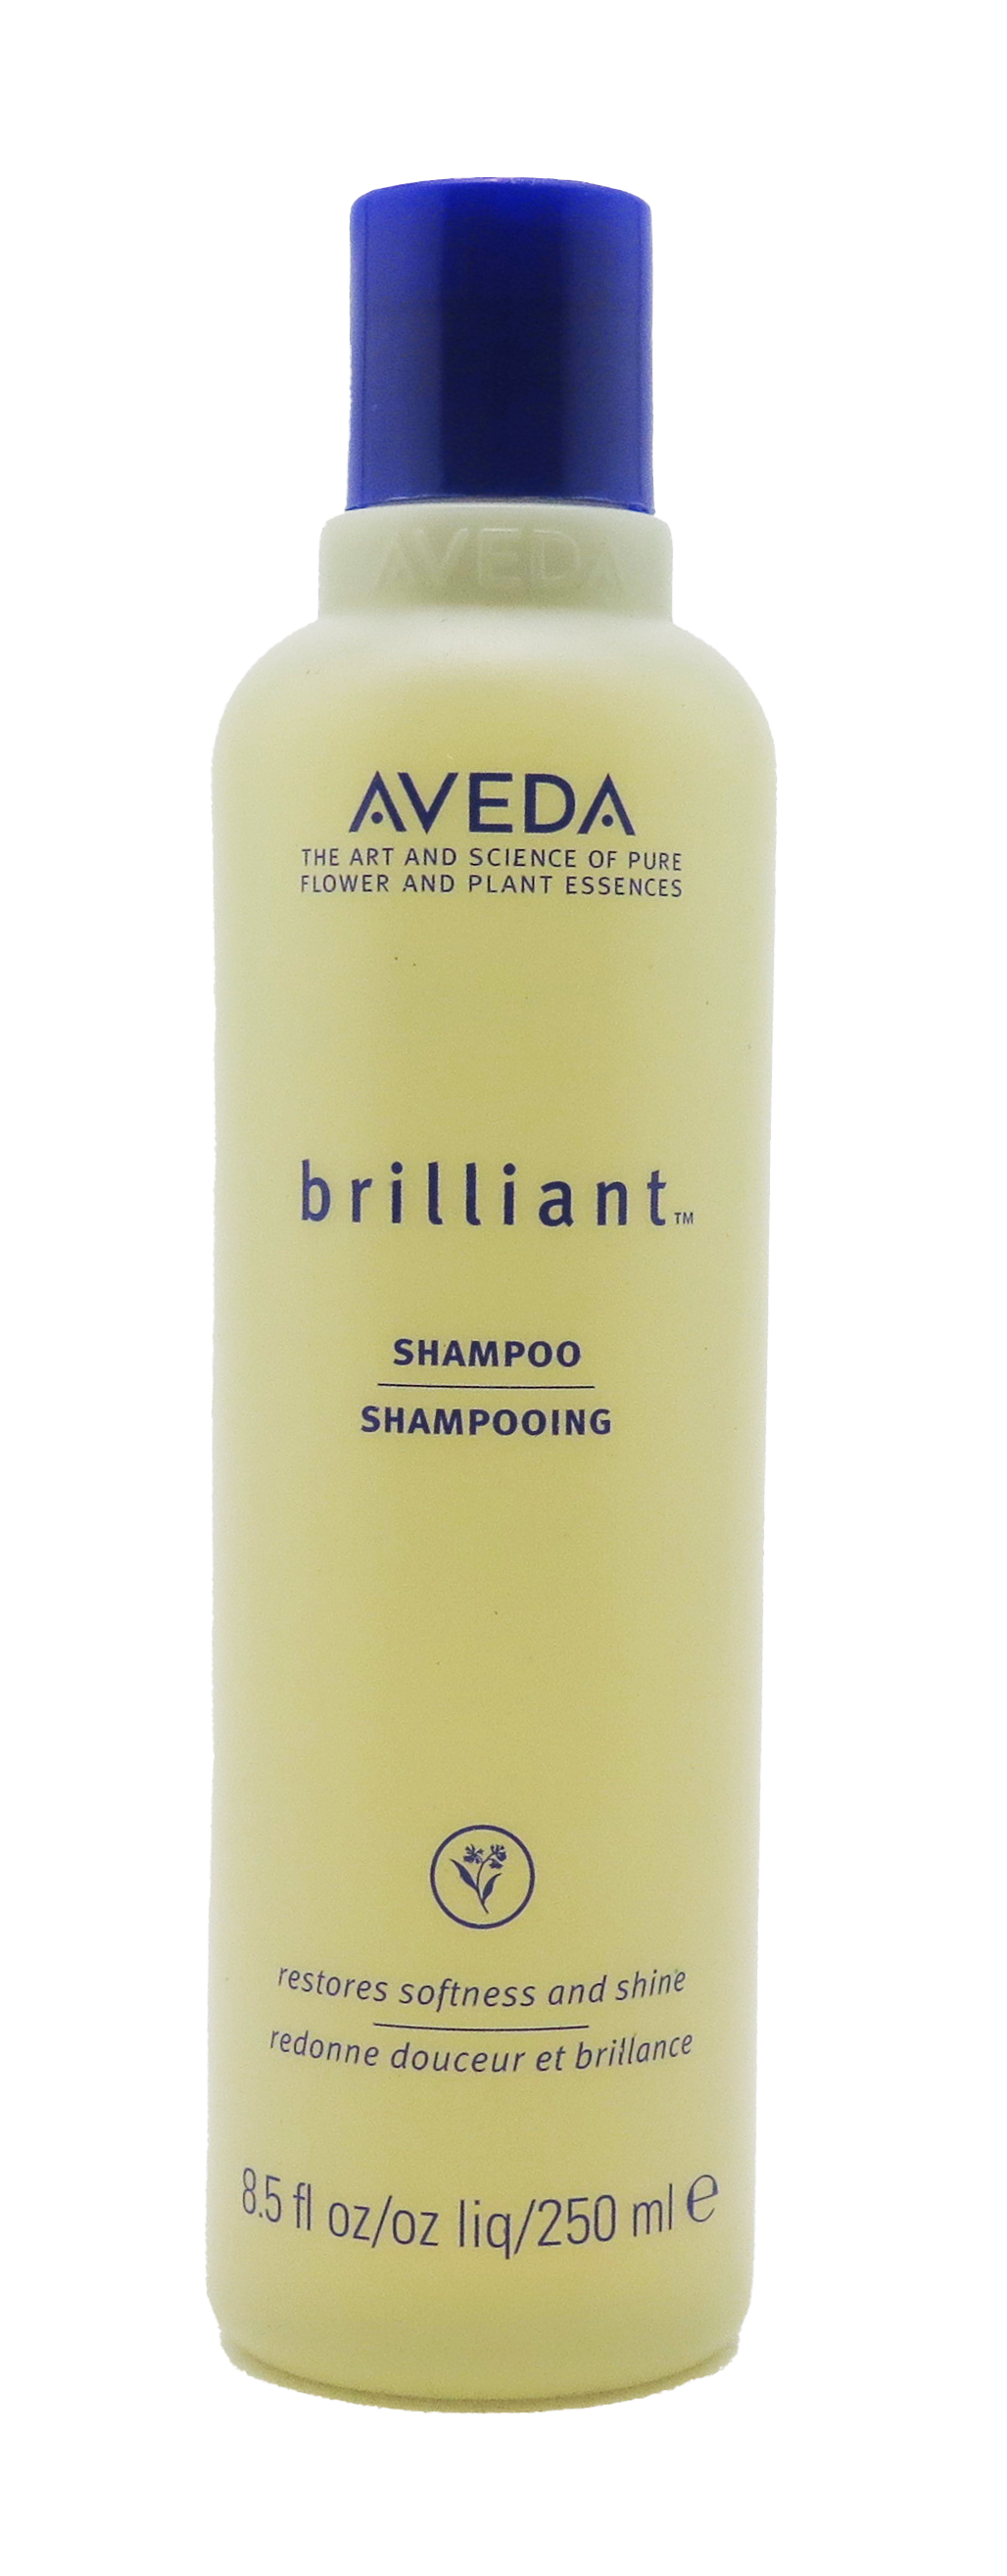 Aveda Brilliant Shampoo 8.5 fl oz